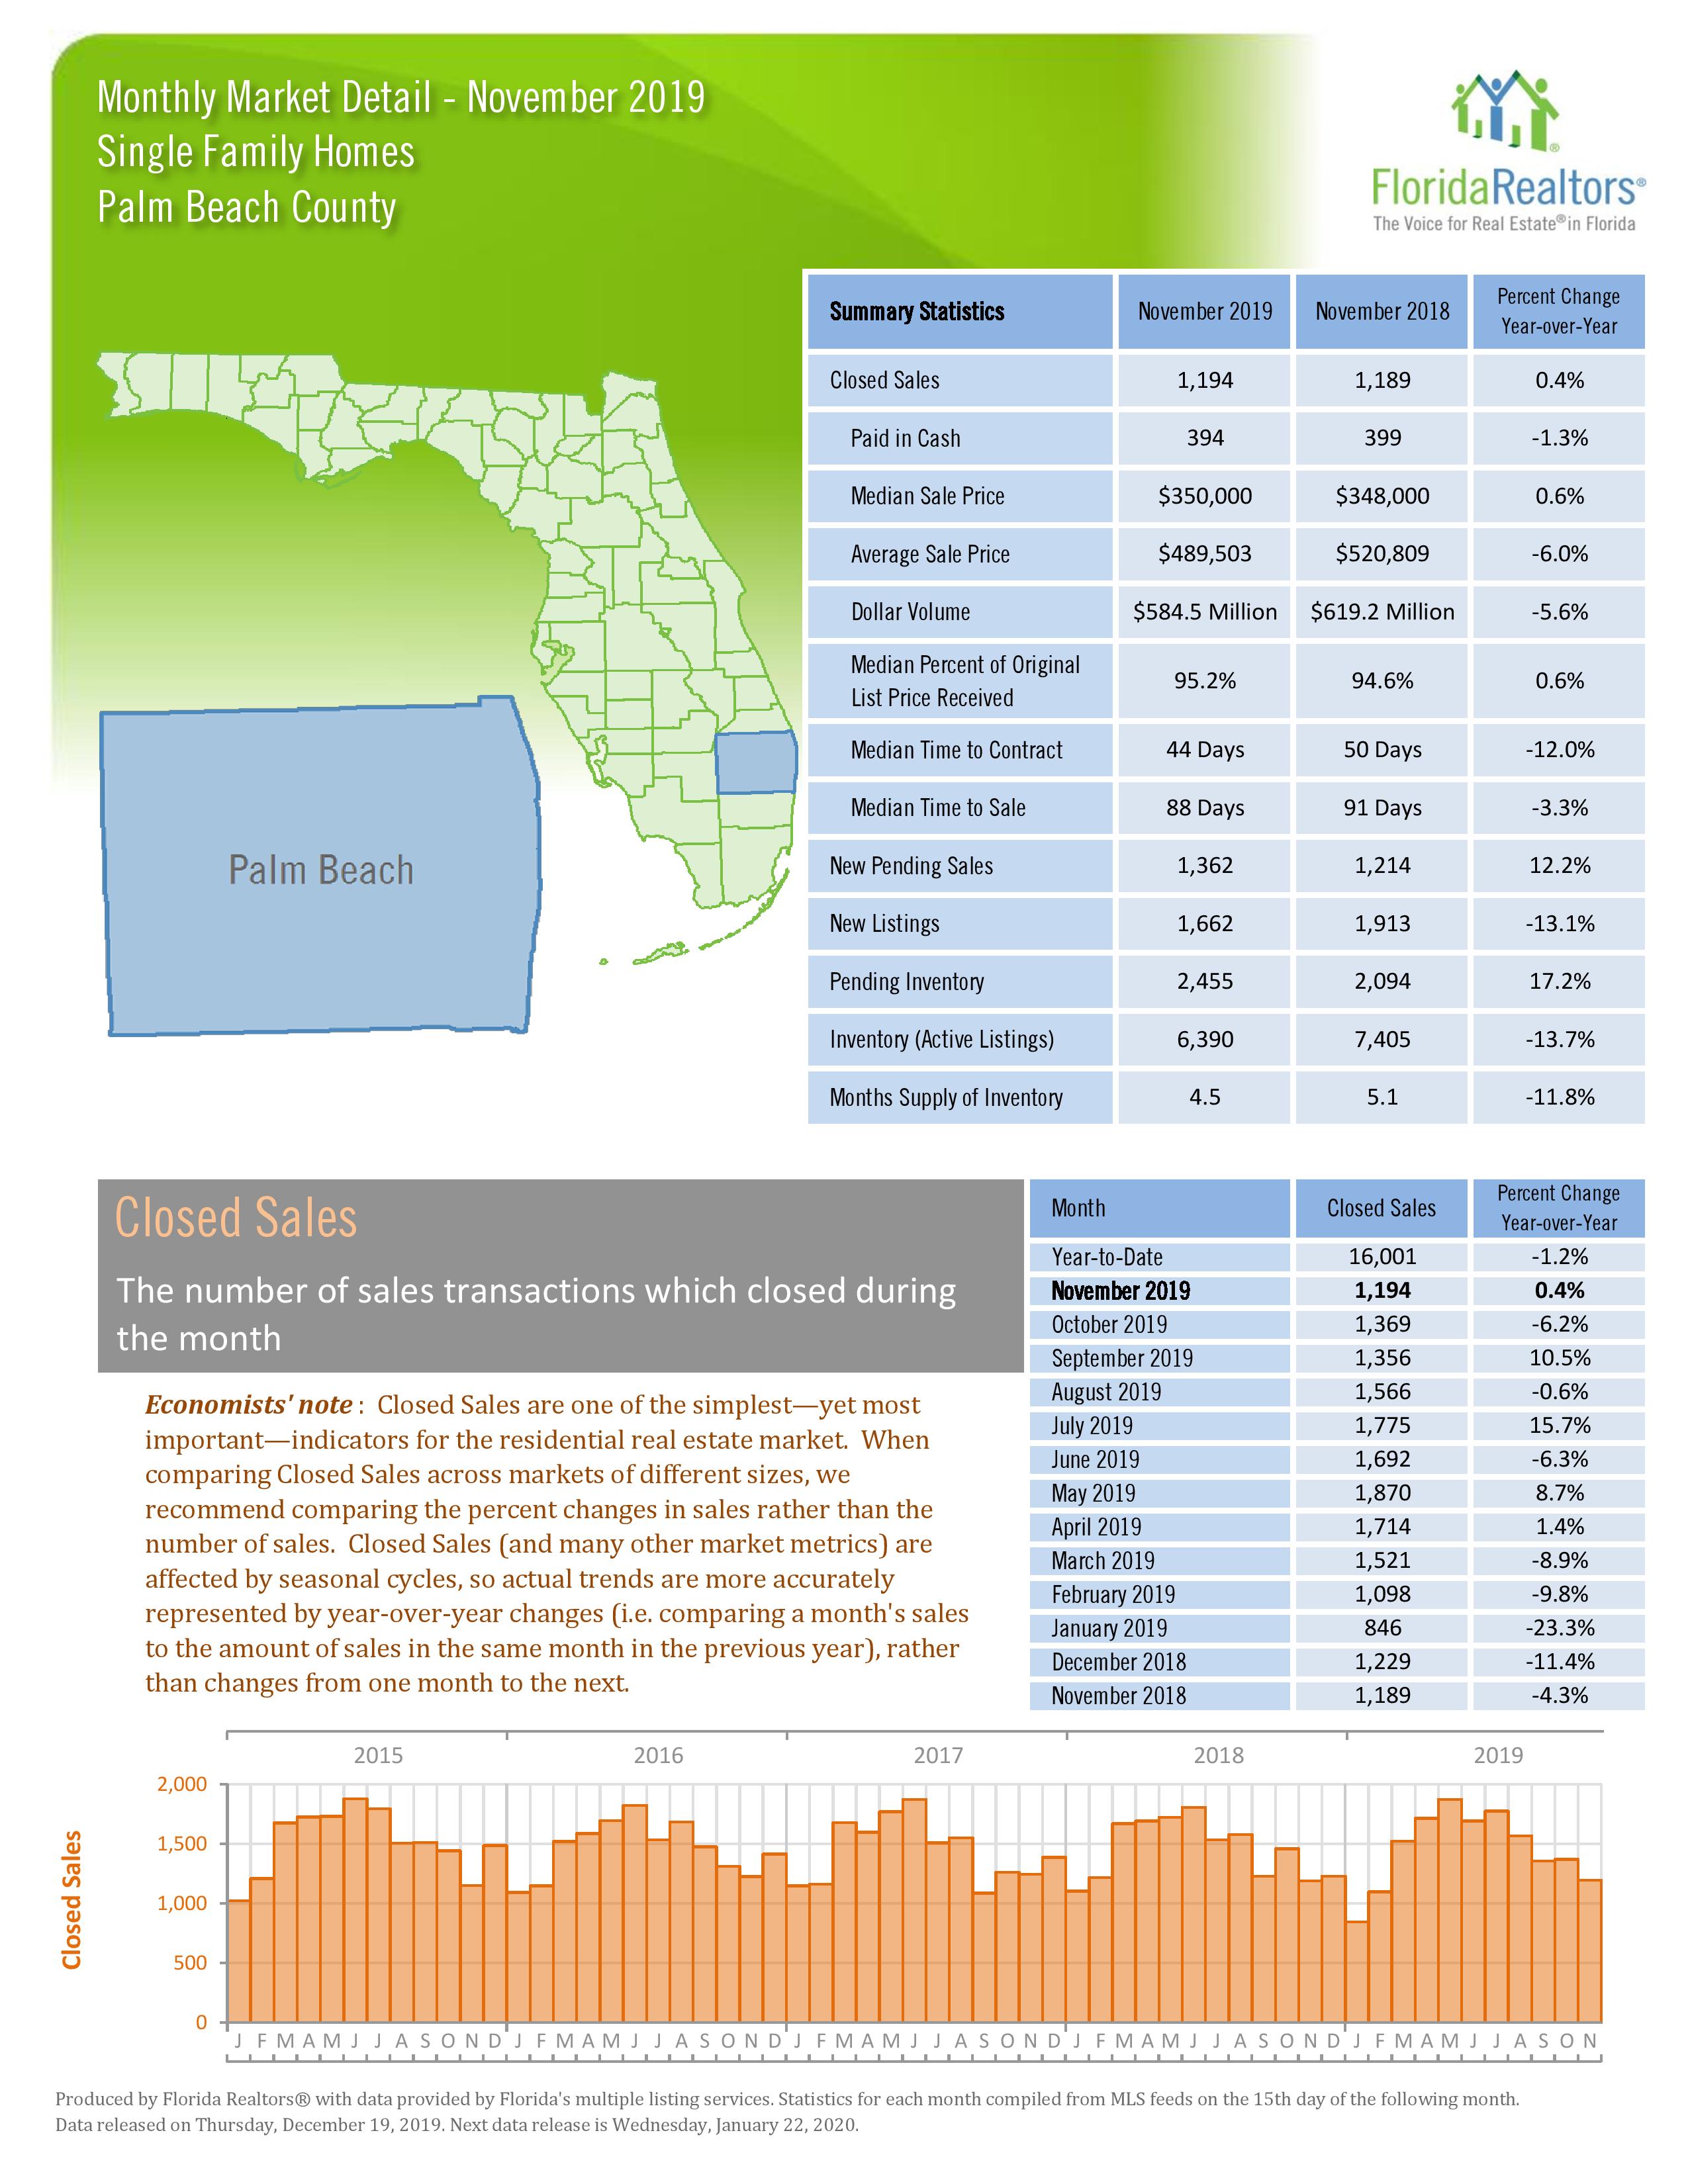 Palm Beach County Statistics for November 2019